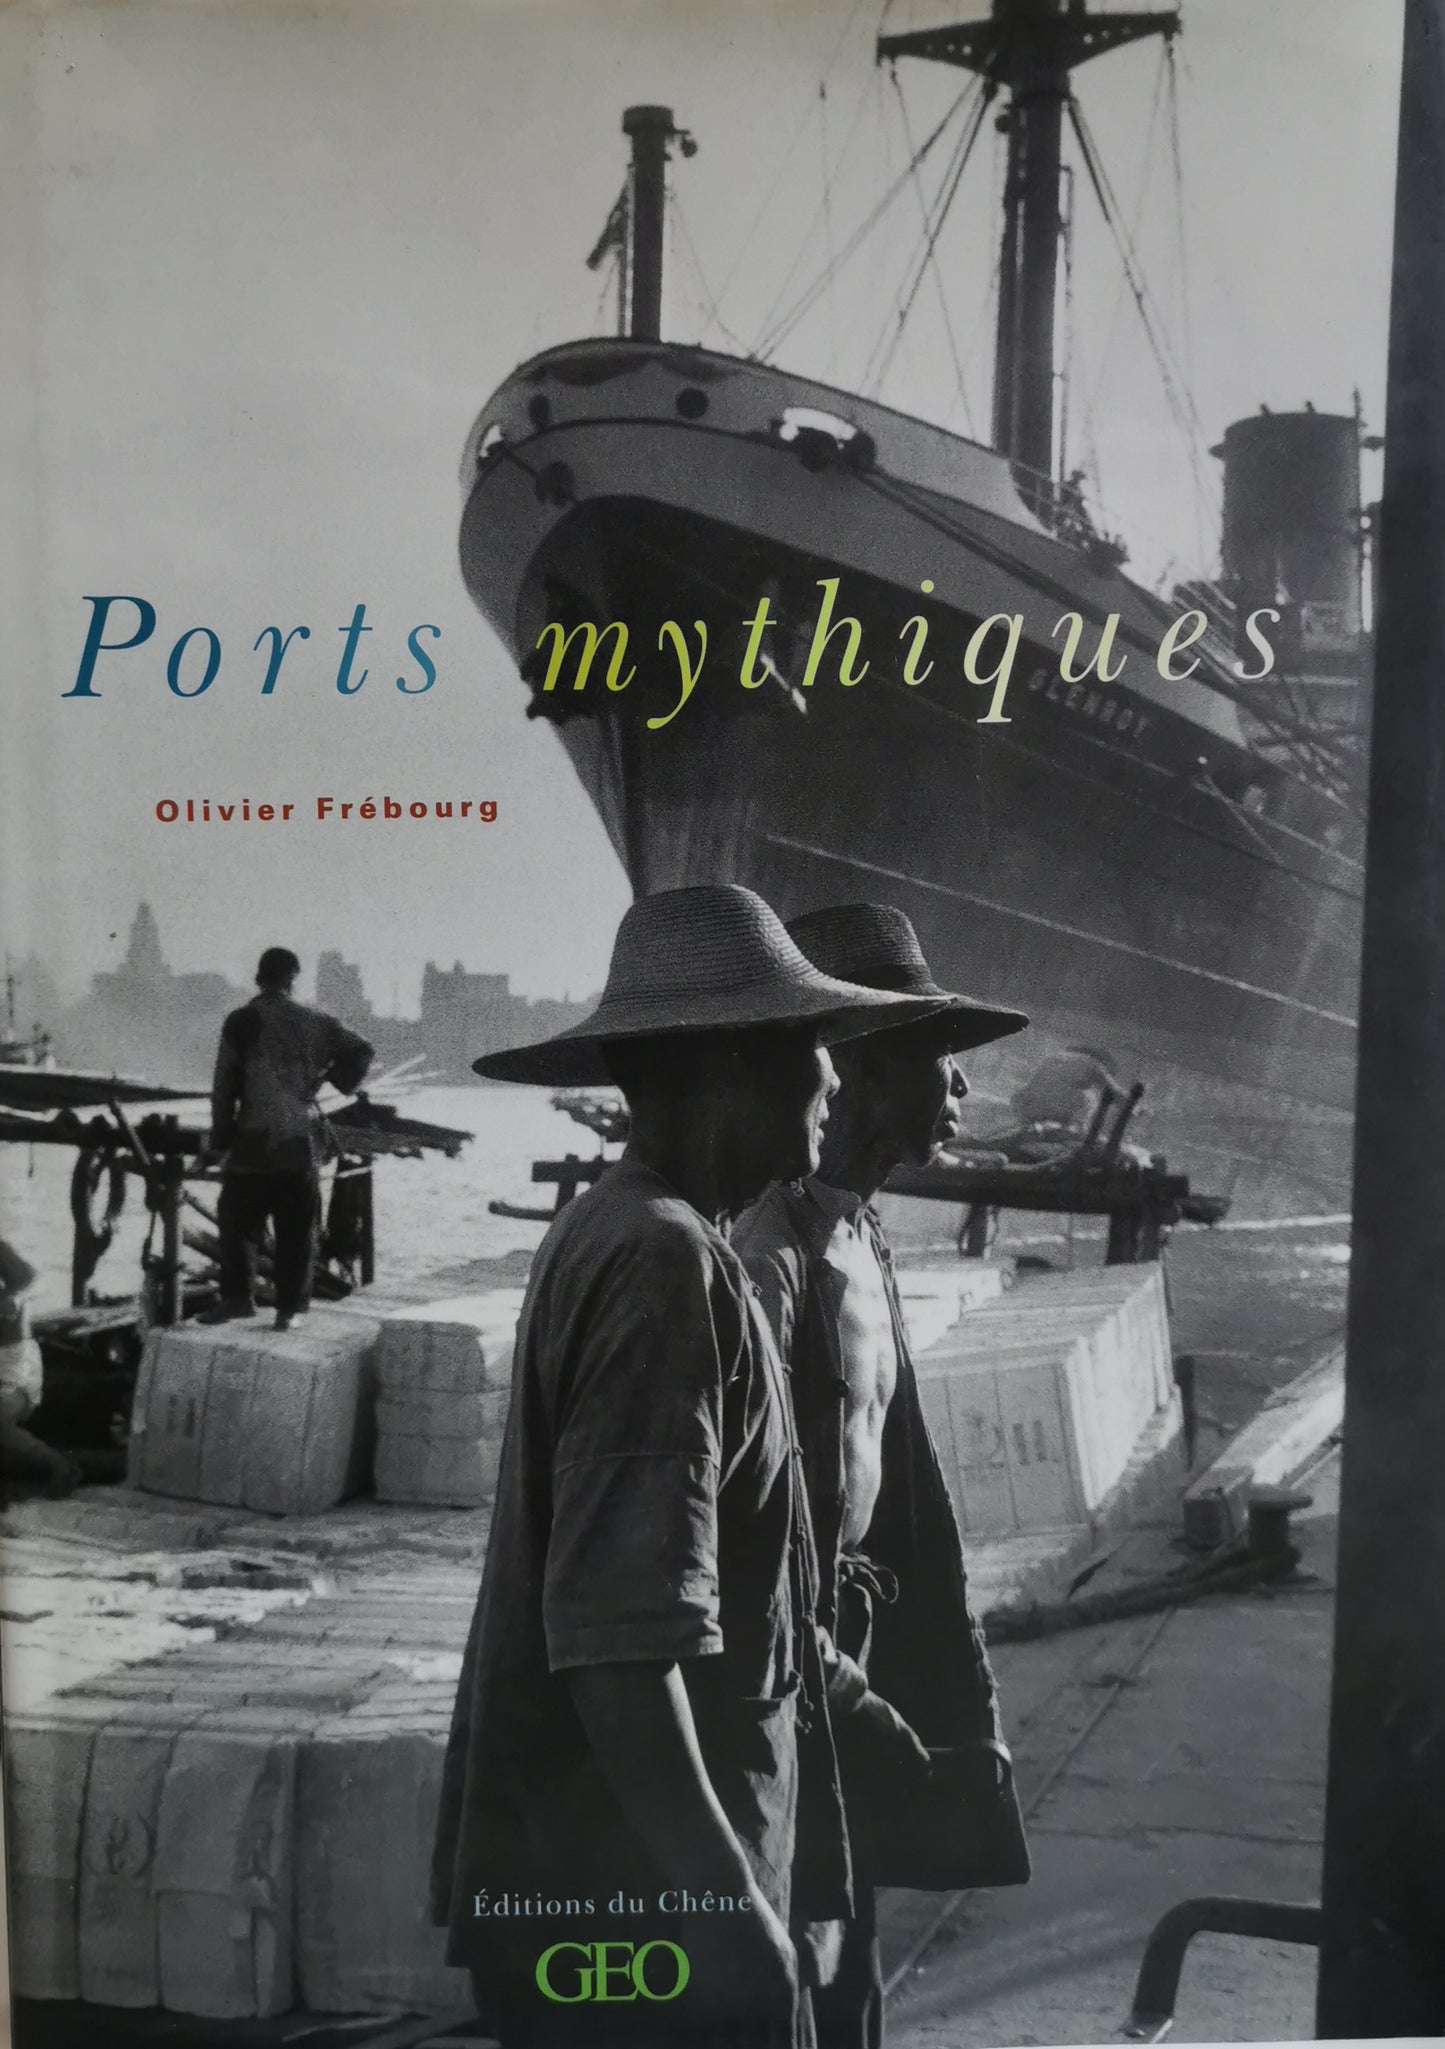 Ports mythiques, Olivier Frébourg, ed. du Chêne/Hachette, 2002.